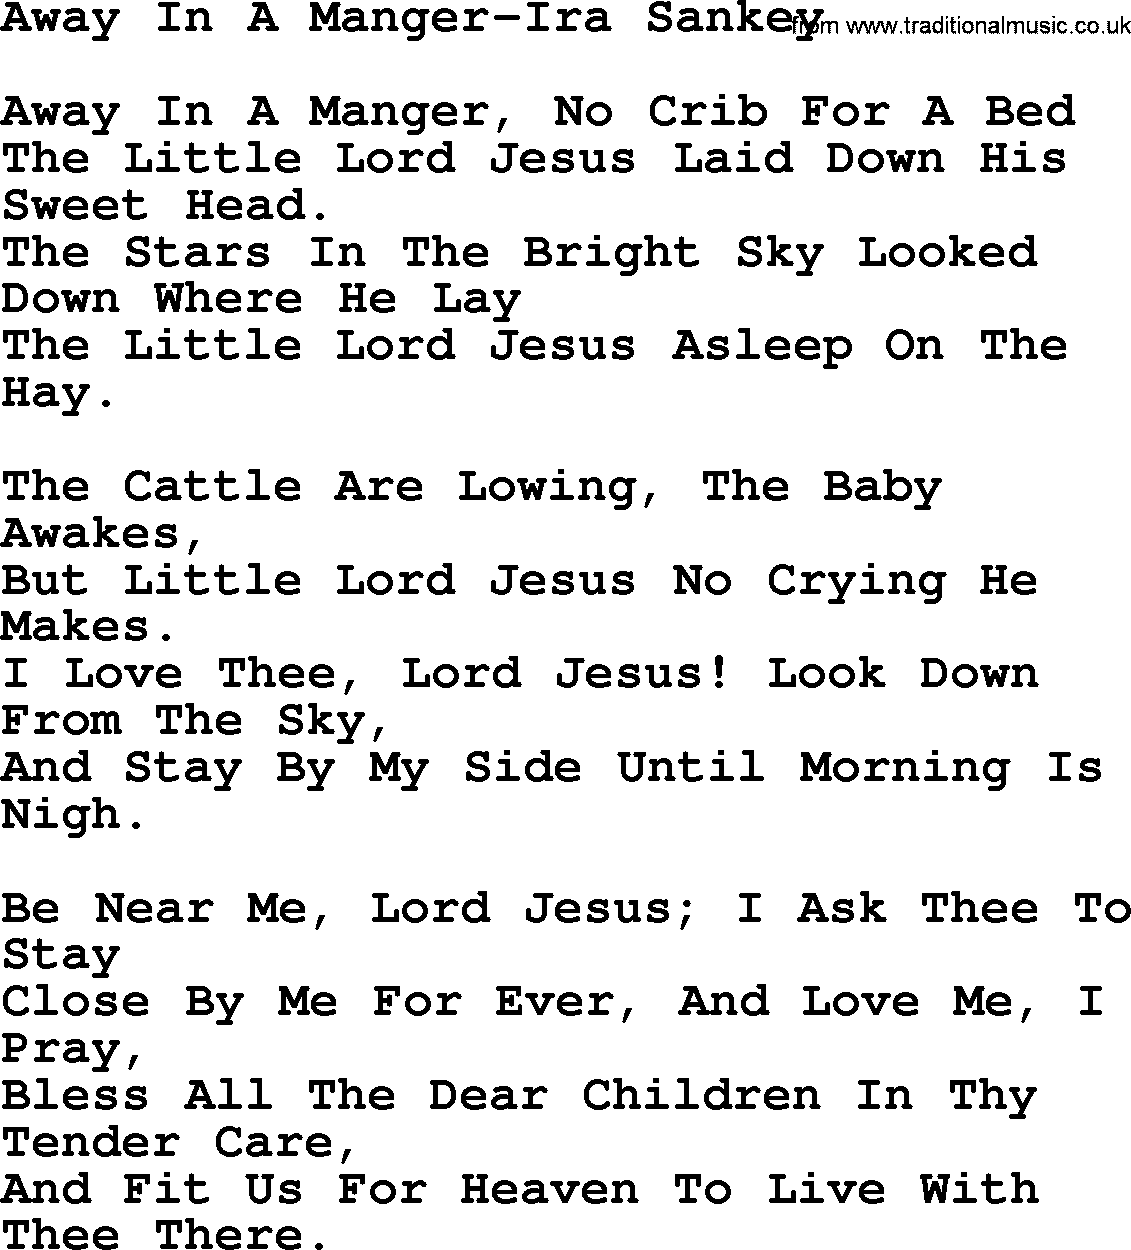 Ira Sankey hymn: Away In A Manger-Ira Sankey, lyrics